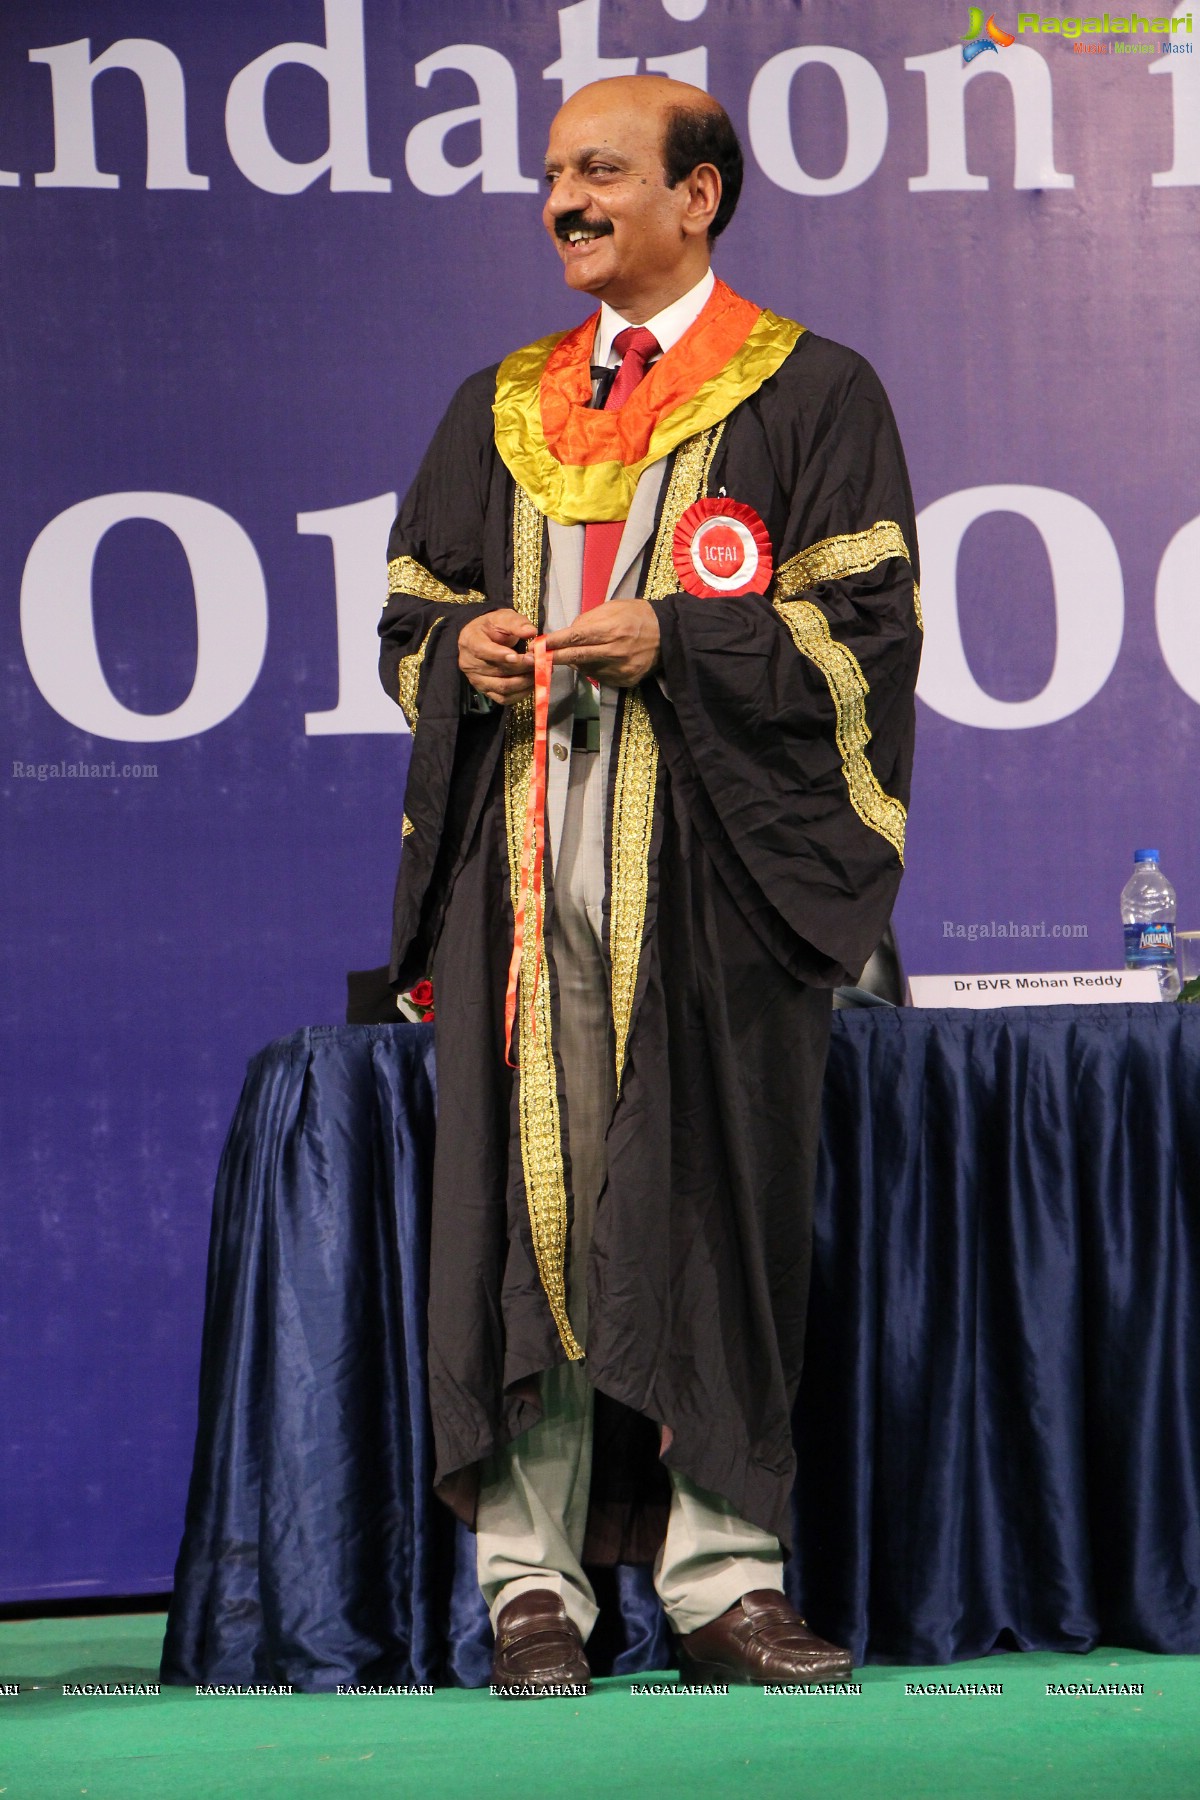 ICFAI University Convocation Ceremony (July 2015)